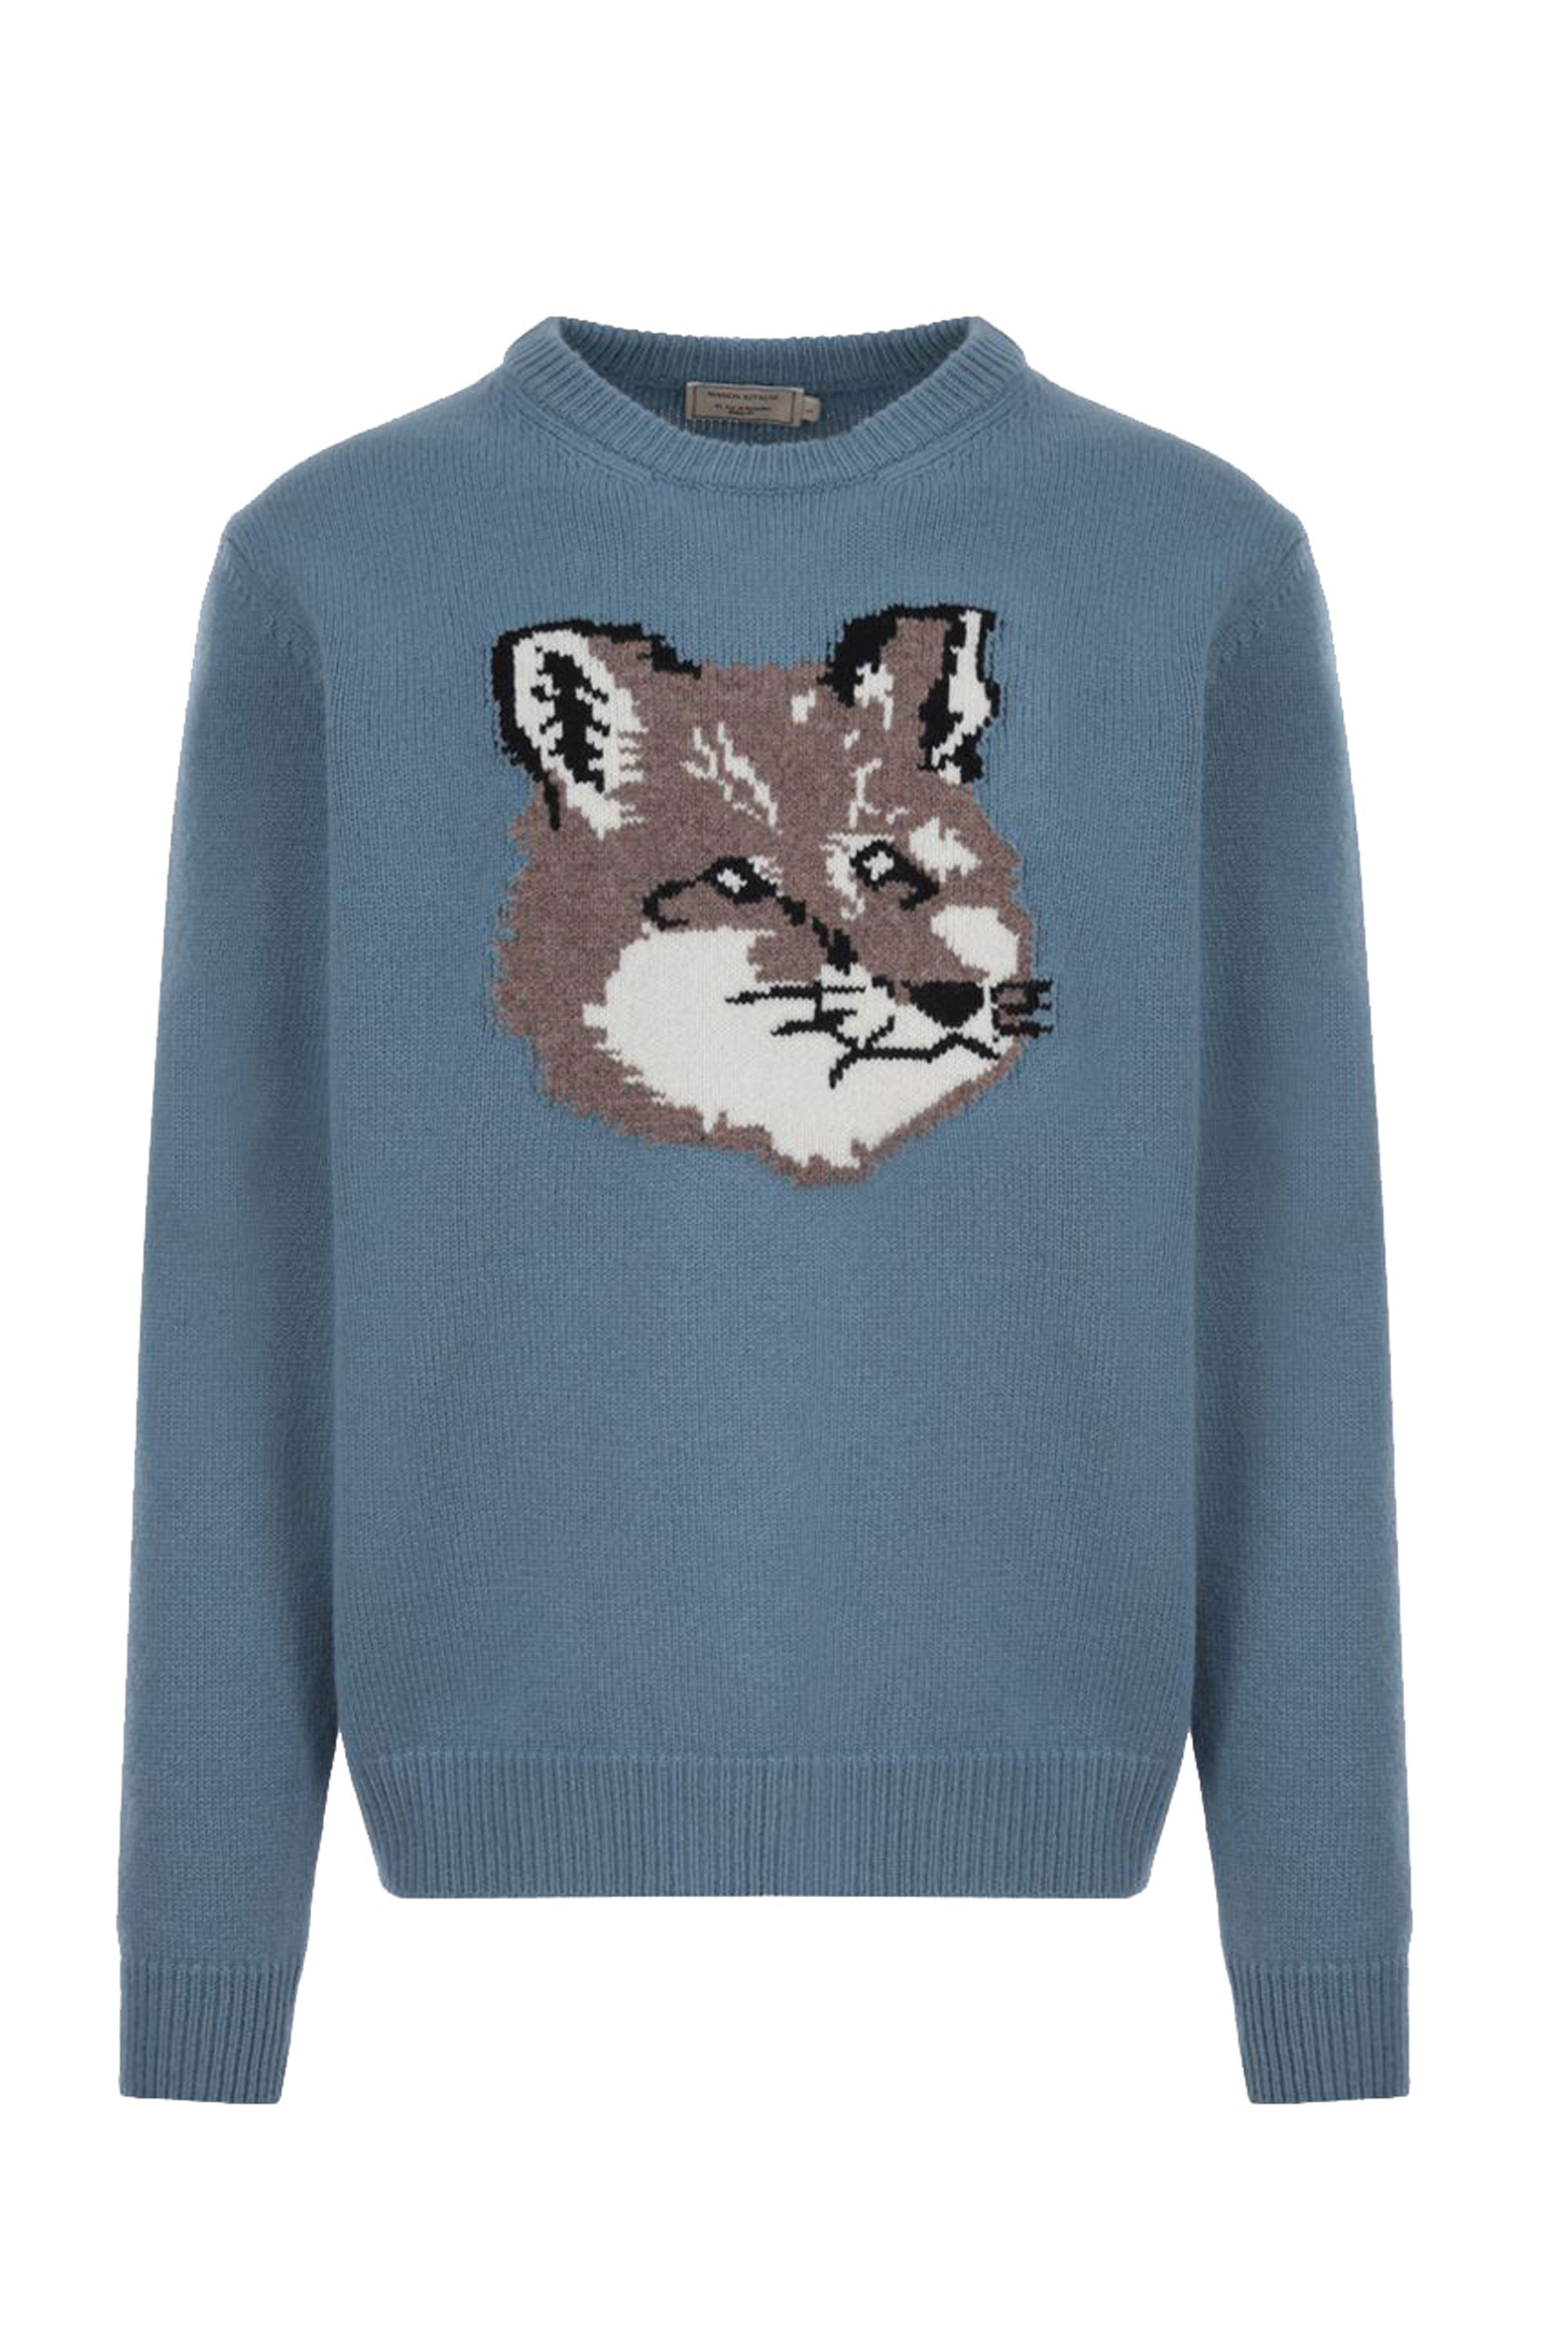 20FW FOX Head Sweater.  2 corlor(khaki,Sky blue) 예약시 원하시는 색상기입 해주세요. 발매전 게시글 예약시 5%할인쿠폰 증정